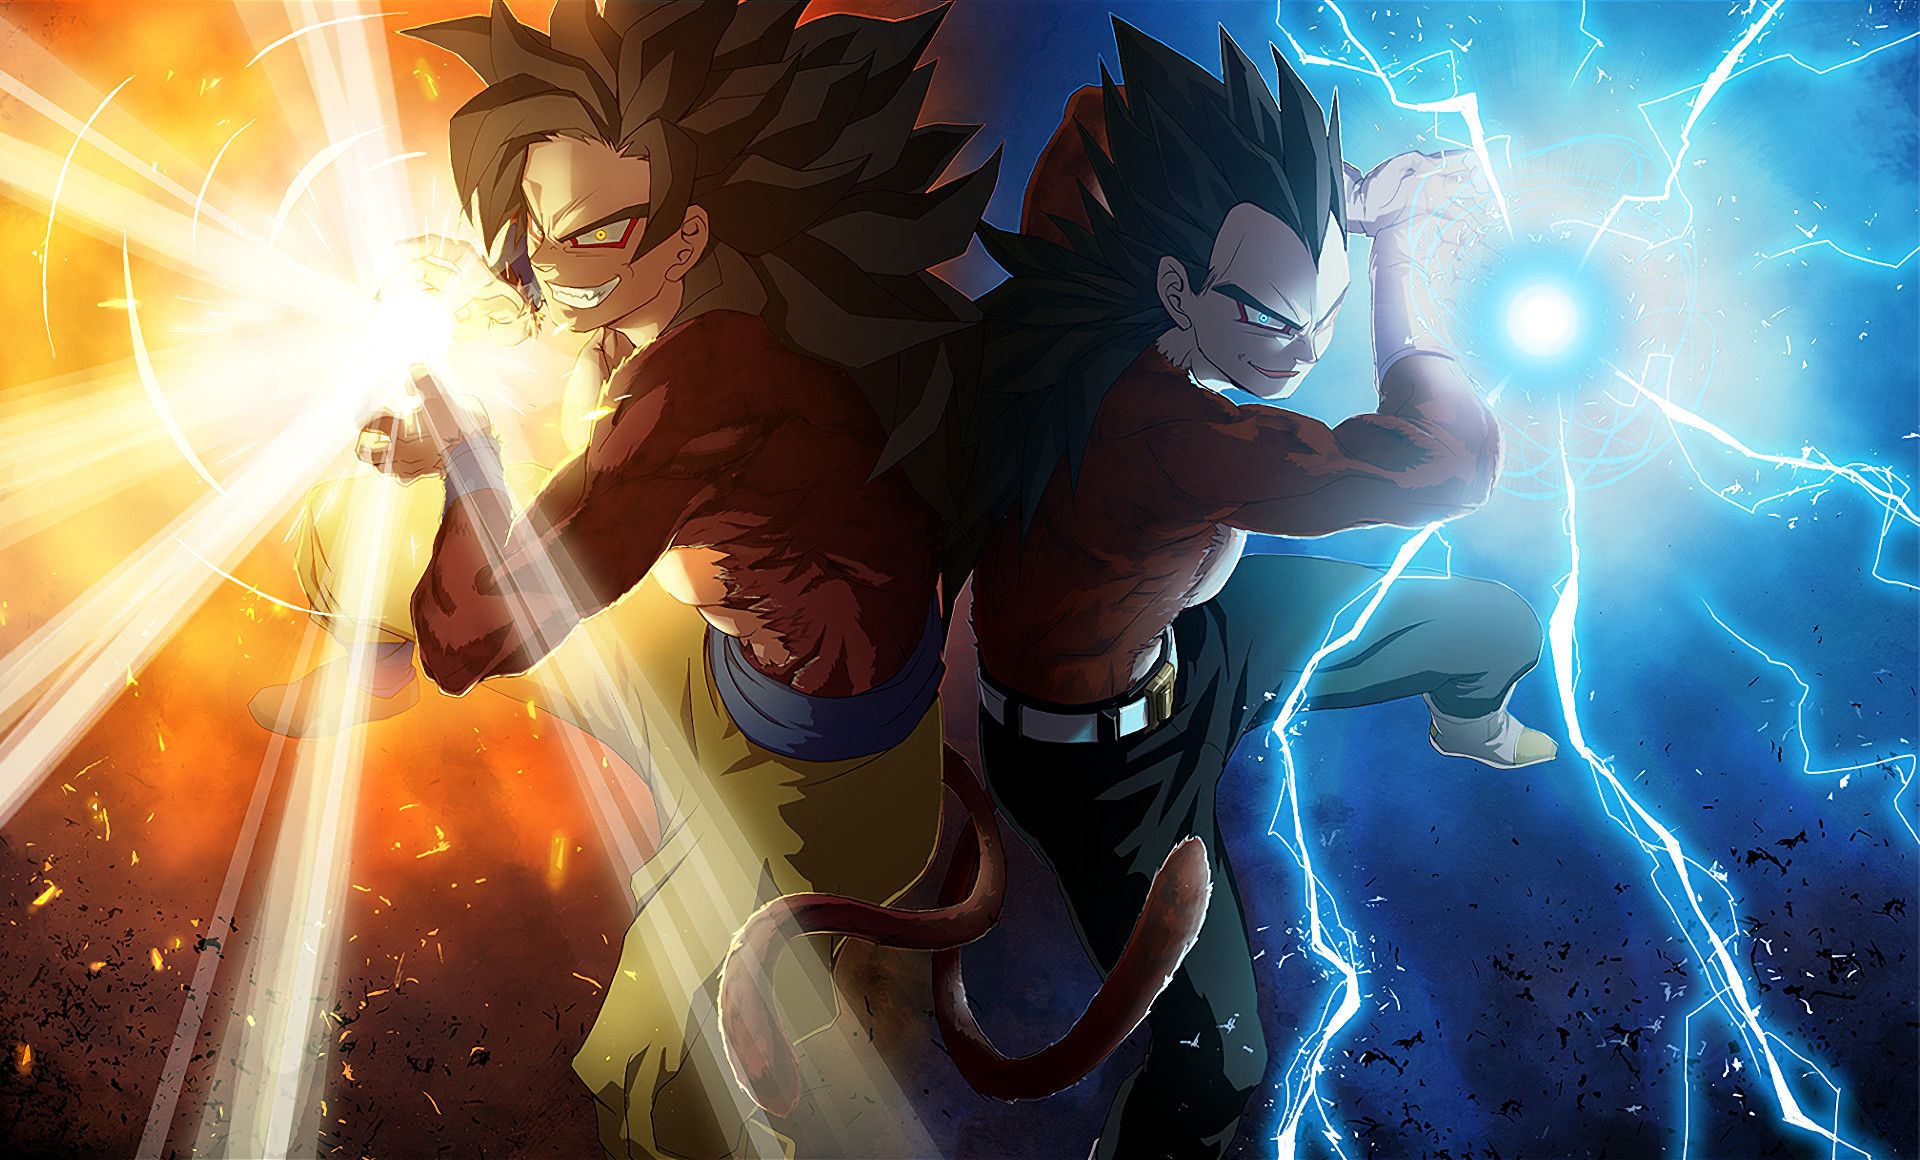 Dbz Wallpaper Goku and Vegeta